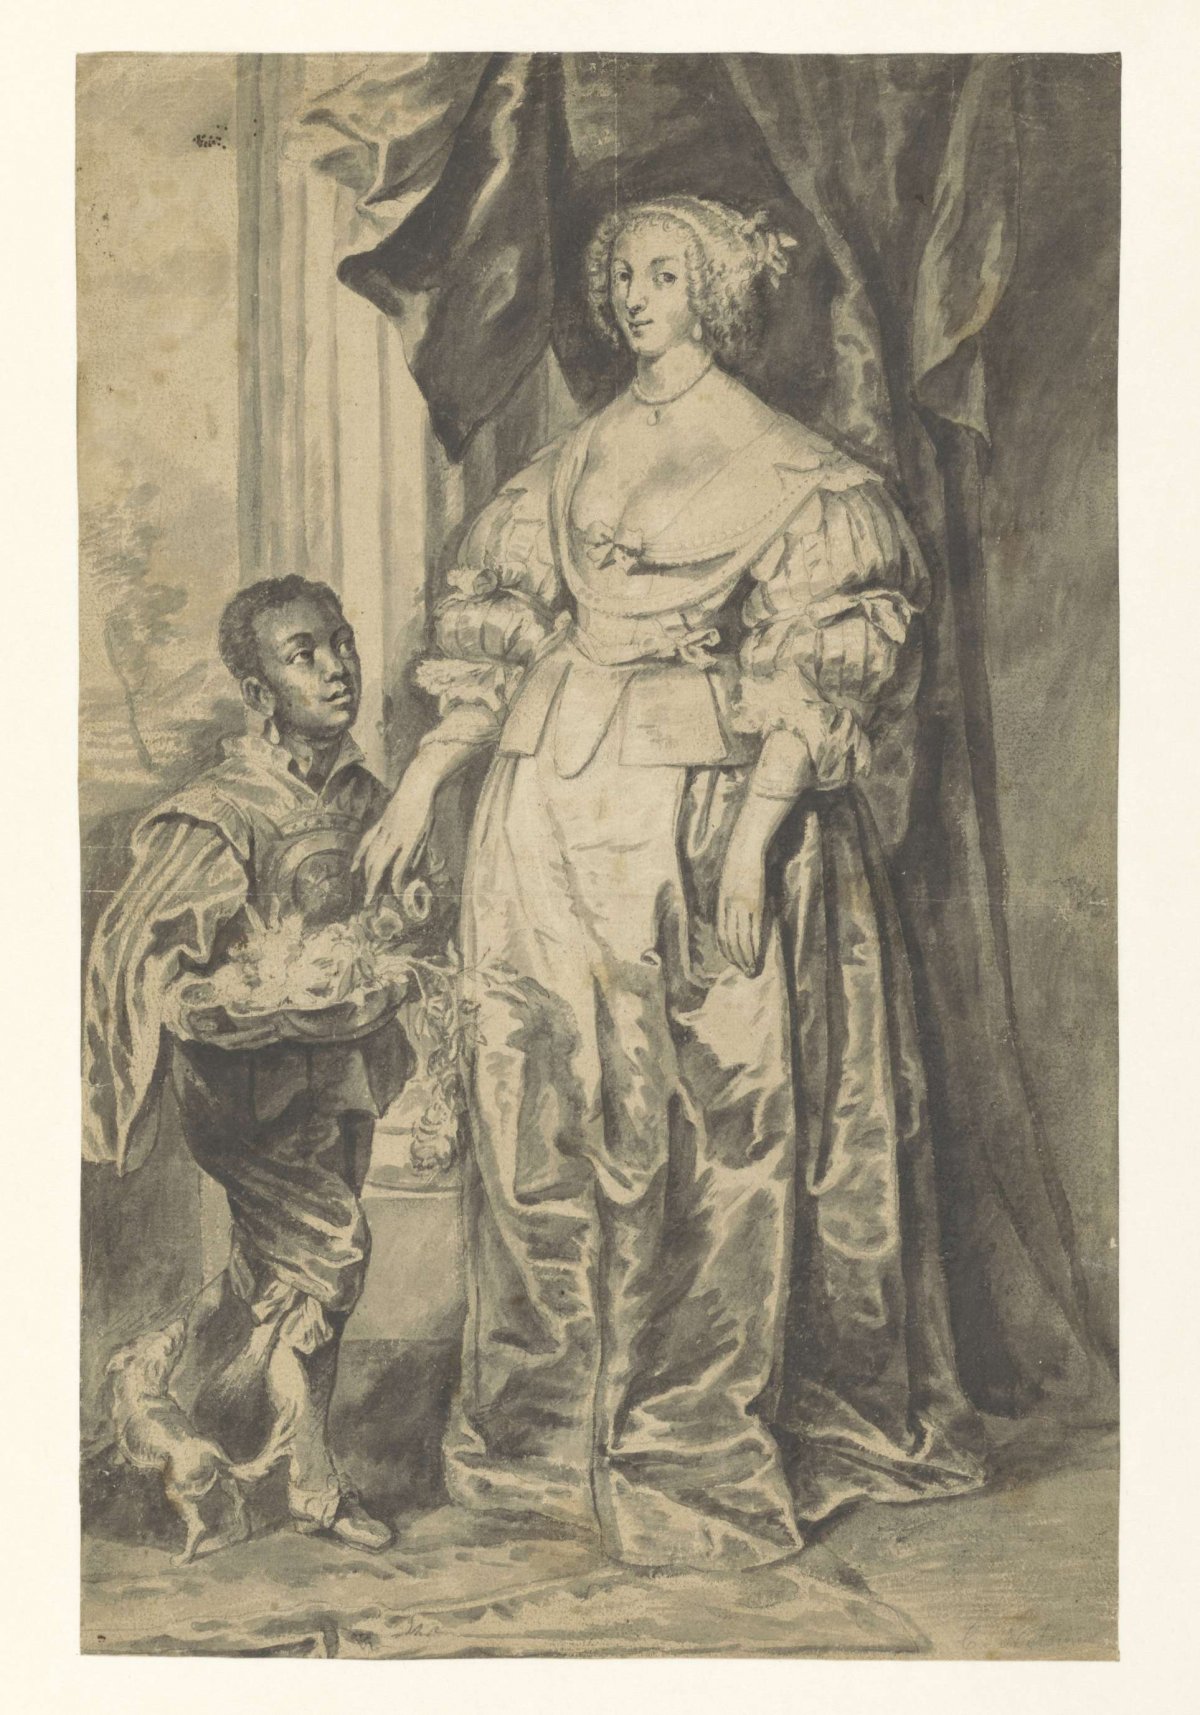 Sketch of a portrait of Henrietta Maria de Bourbon, Queen of England, Anthony van Dyck, 1610 - 1641